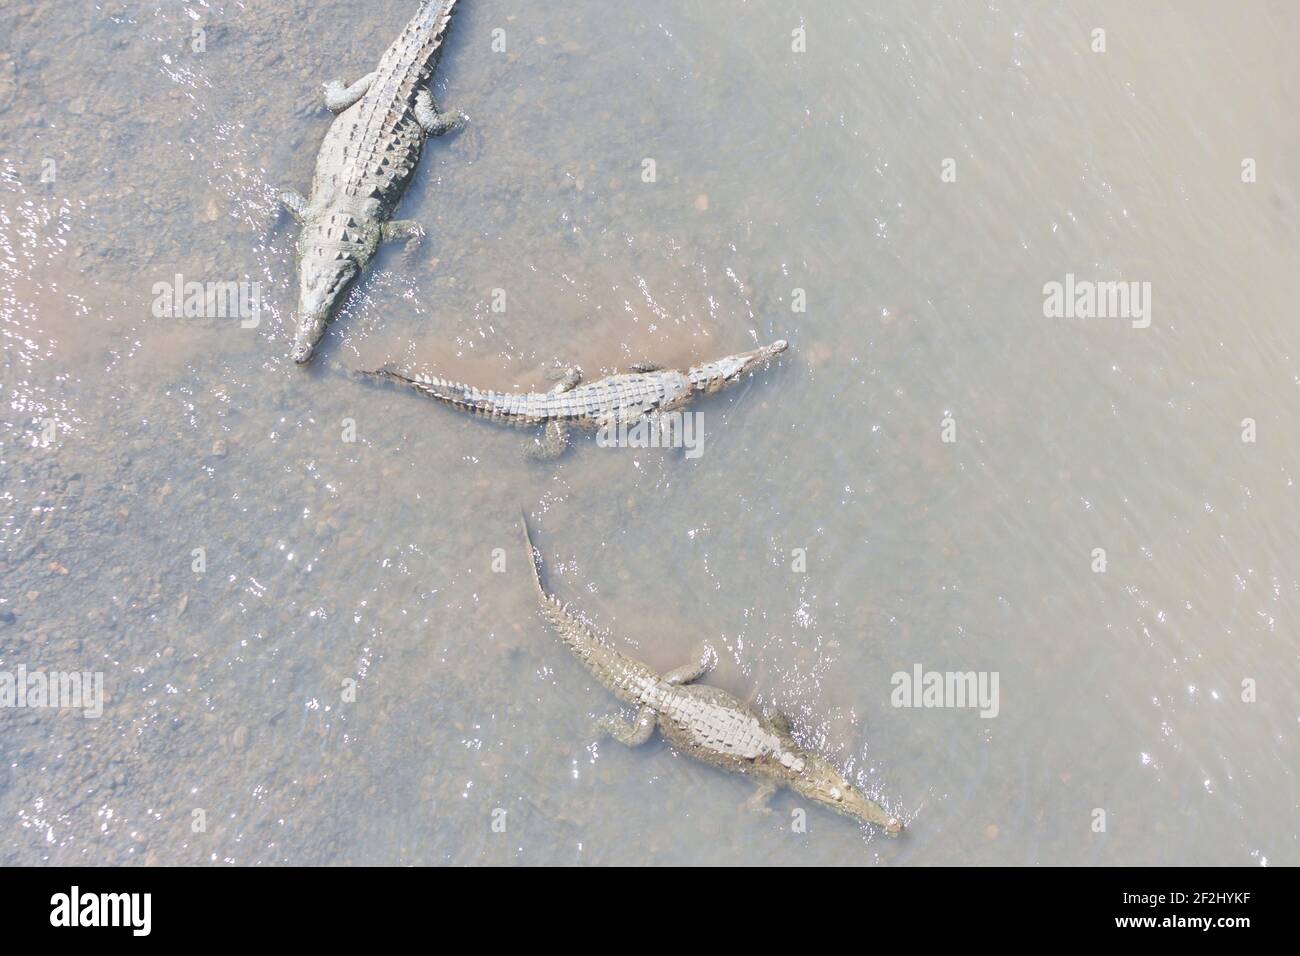 American Crocodiles (Crocodylus acutus) bathing, Tarcoles river, Jaco, Costa Rica Stock Photo